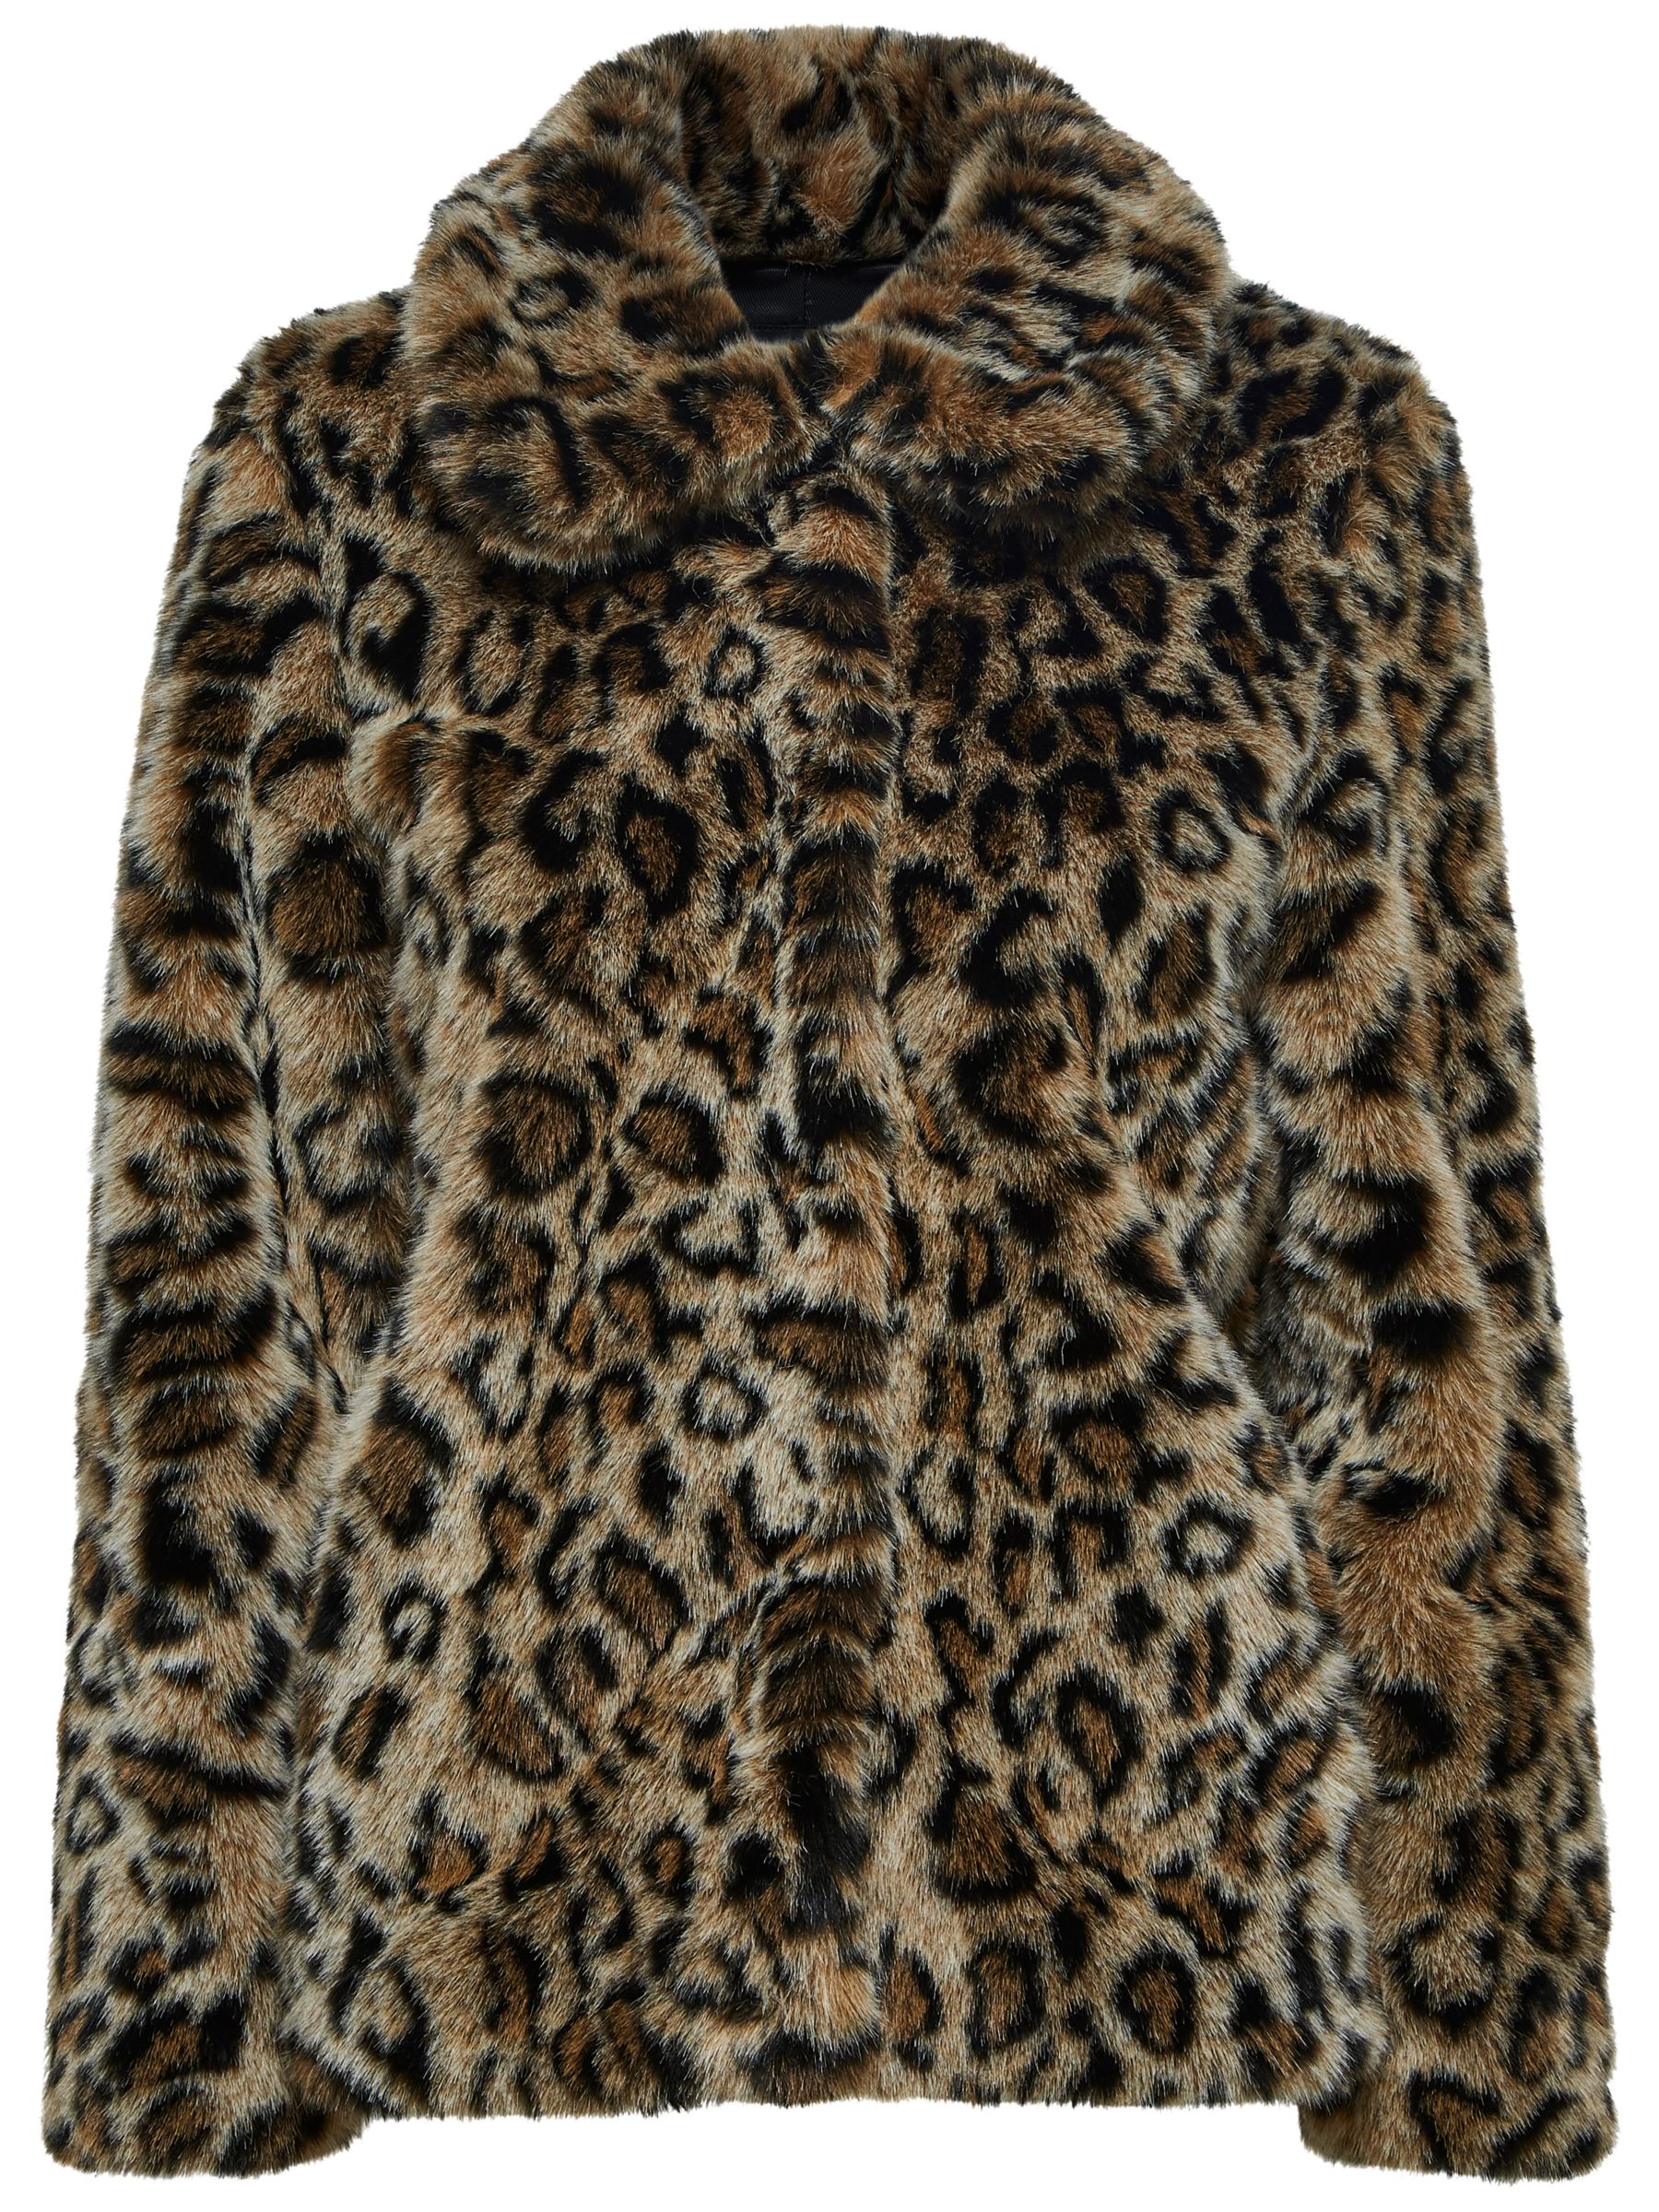 Selected Femme Faux Fur Leopard Print Coat, Black Leopard at John Lewis ...